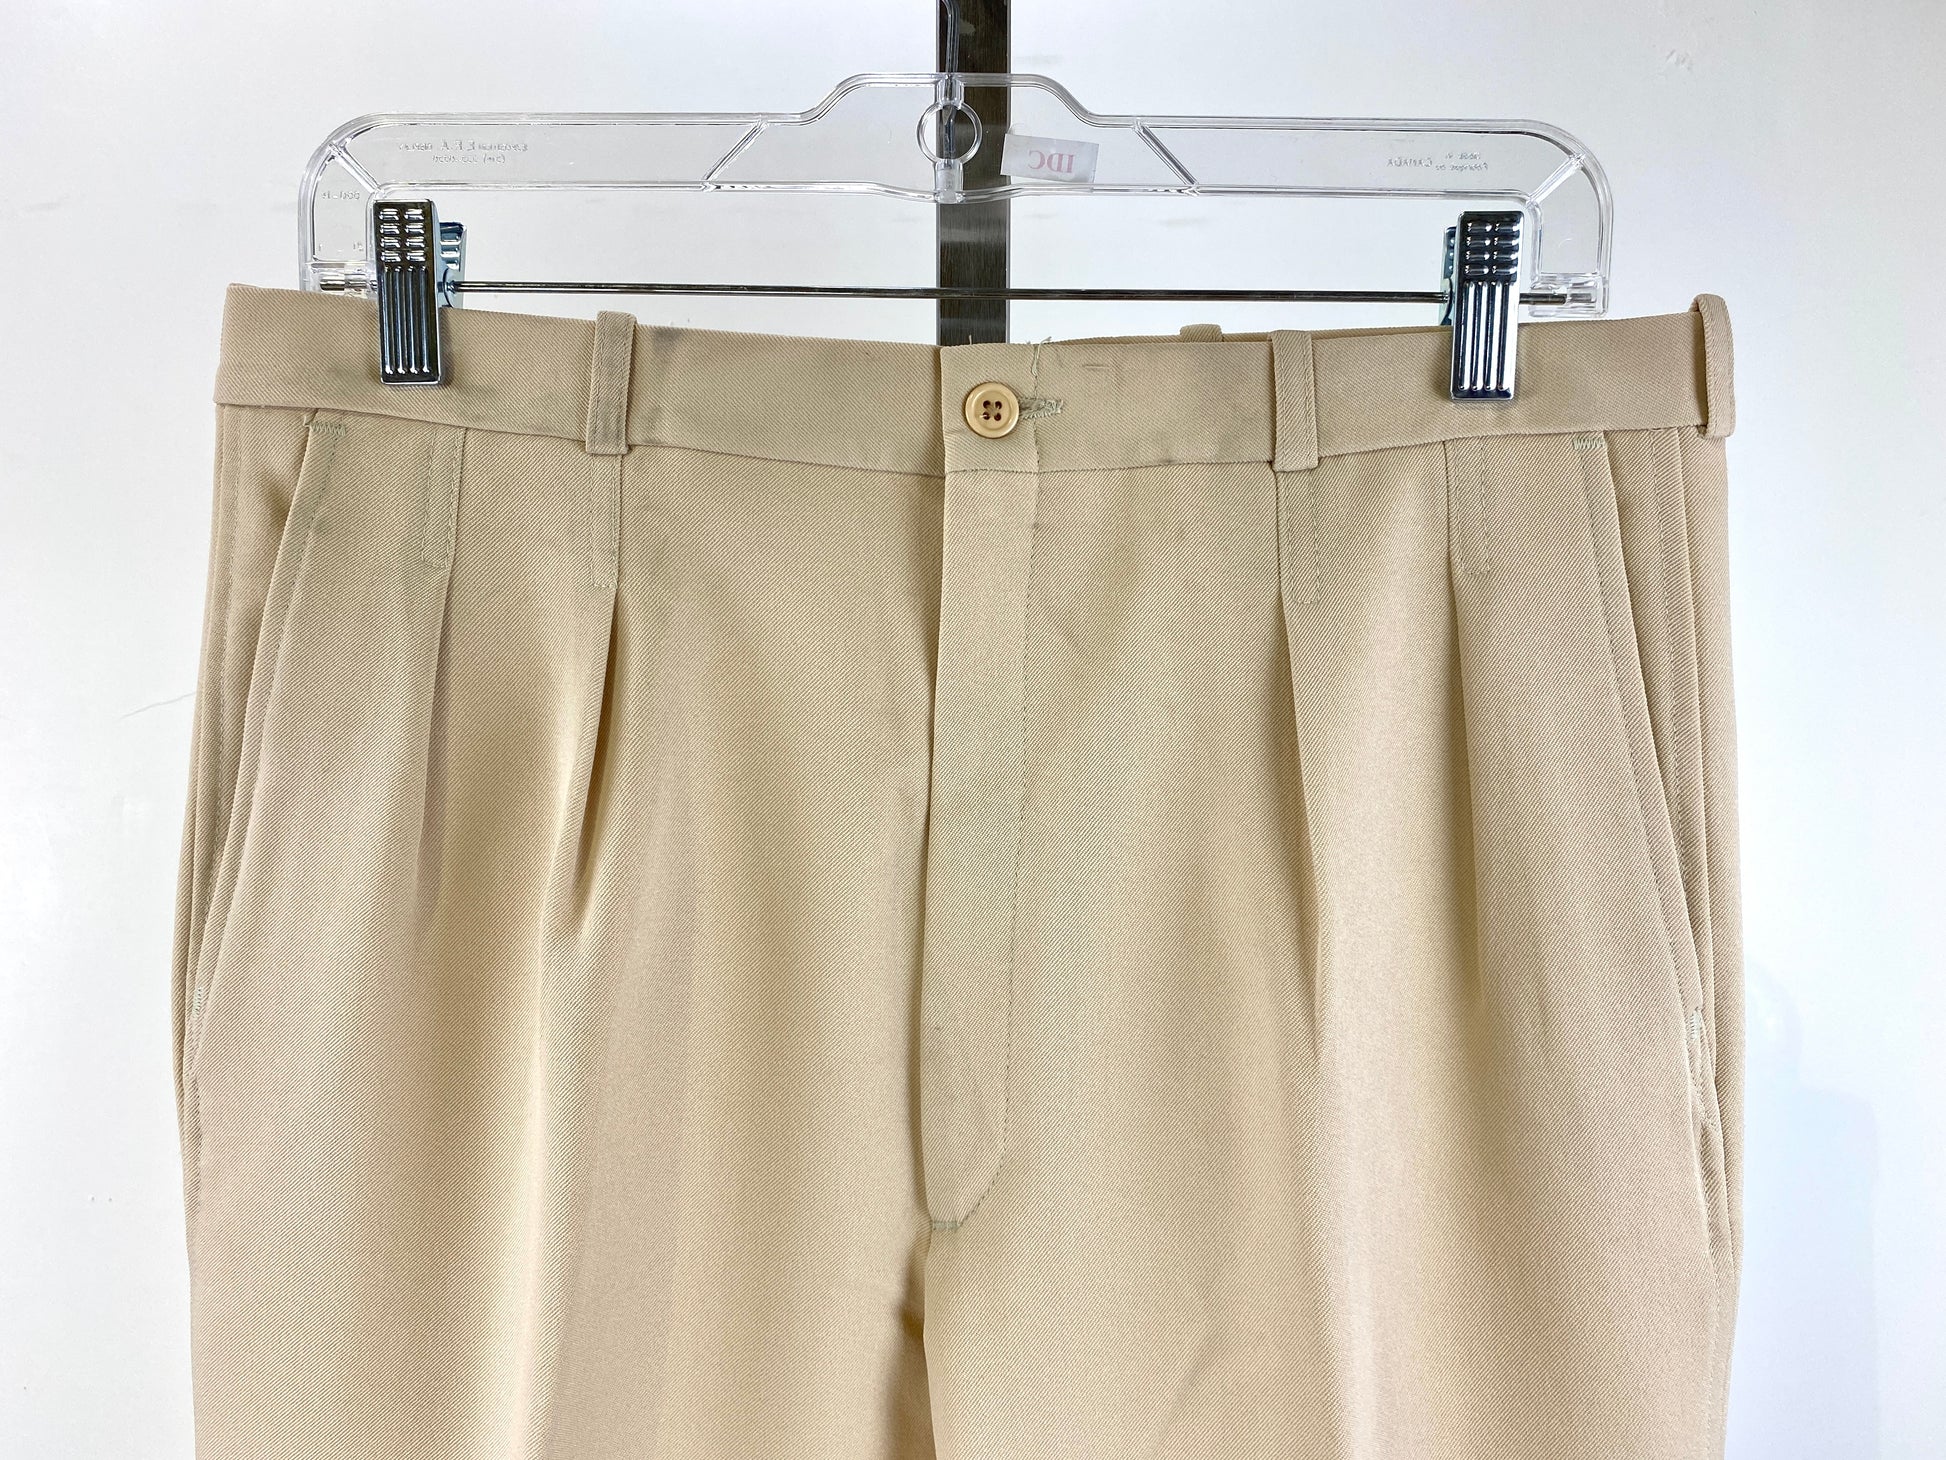 Vintage 1970s Deadstock Flared Levi's Trousers, Men's Beige Slacks, NOS